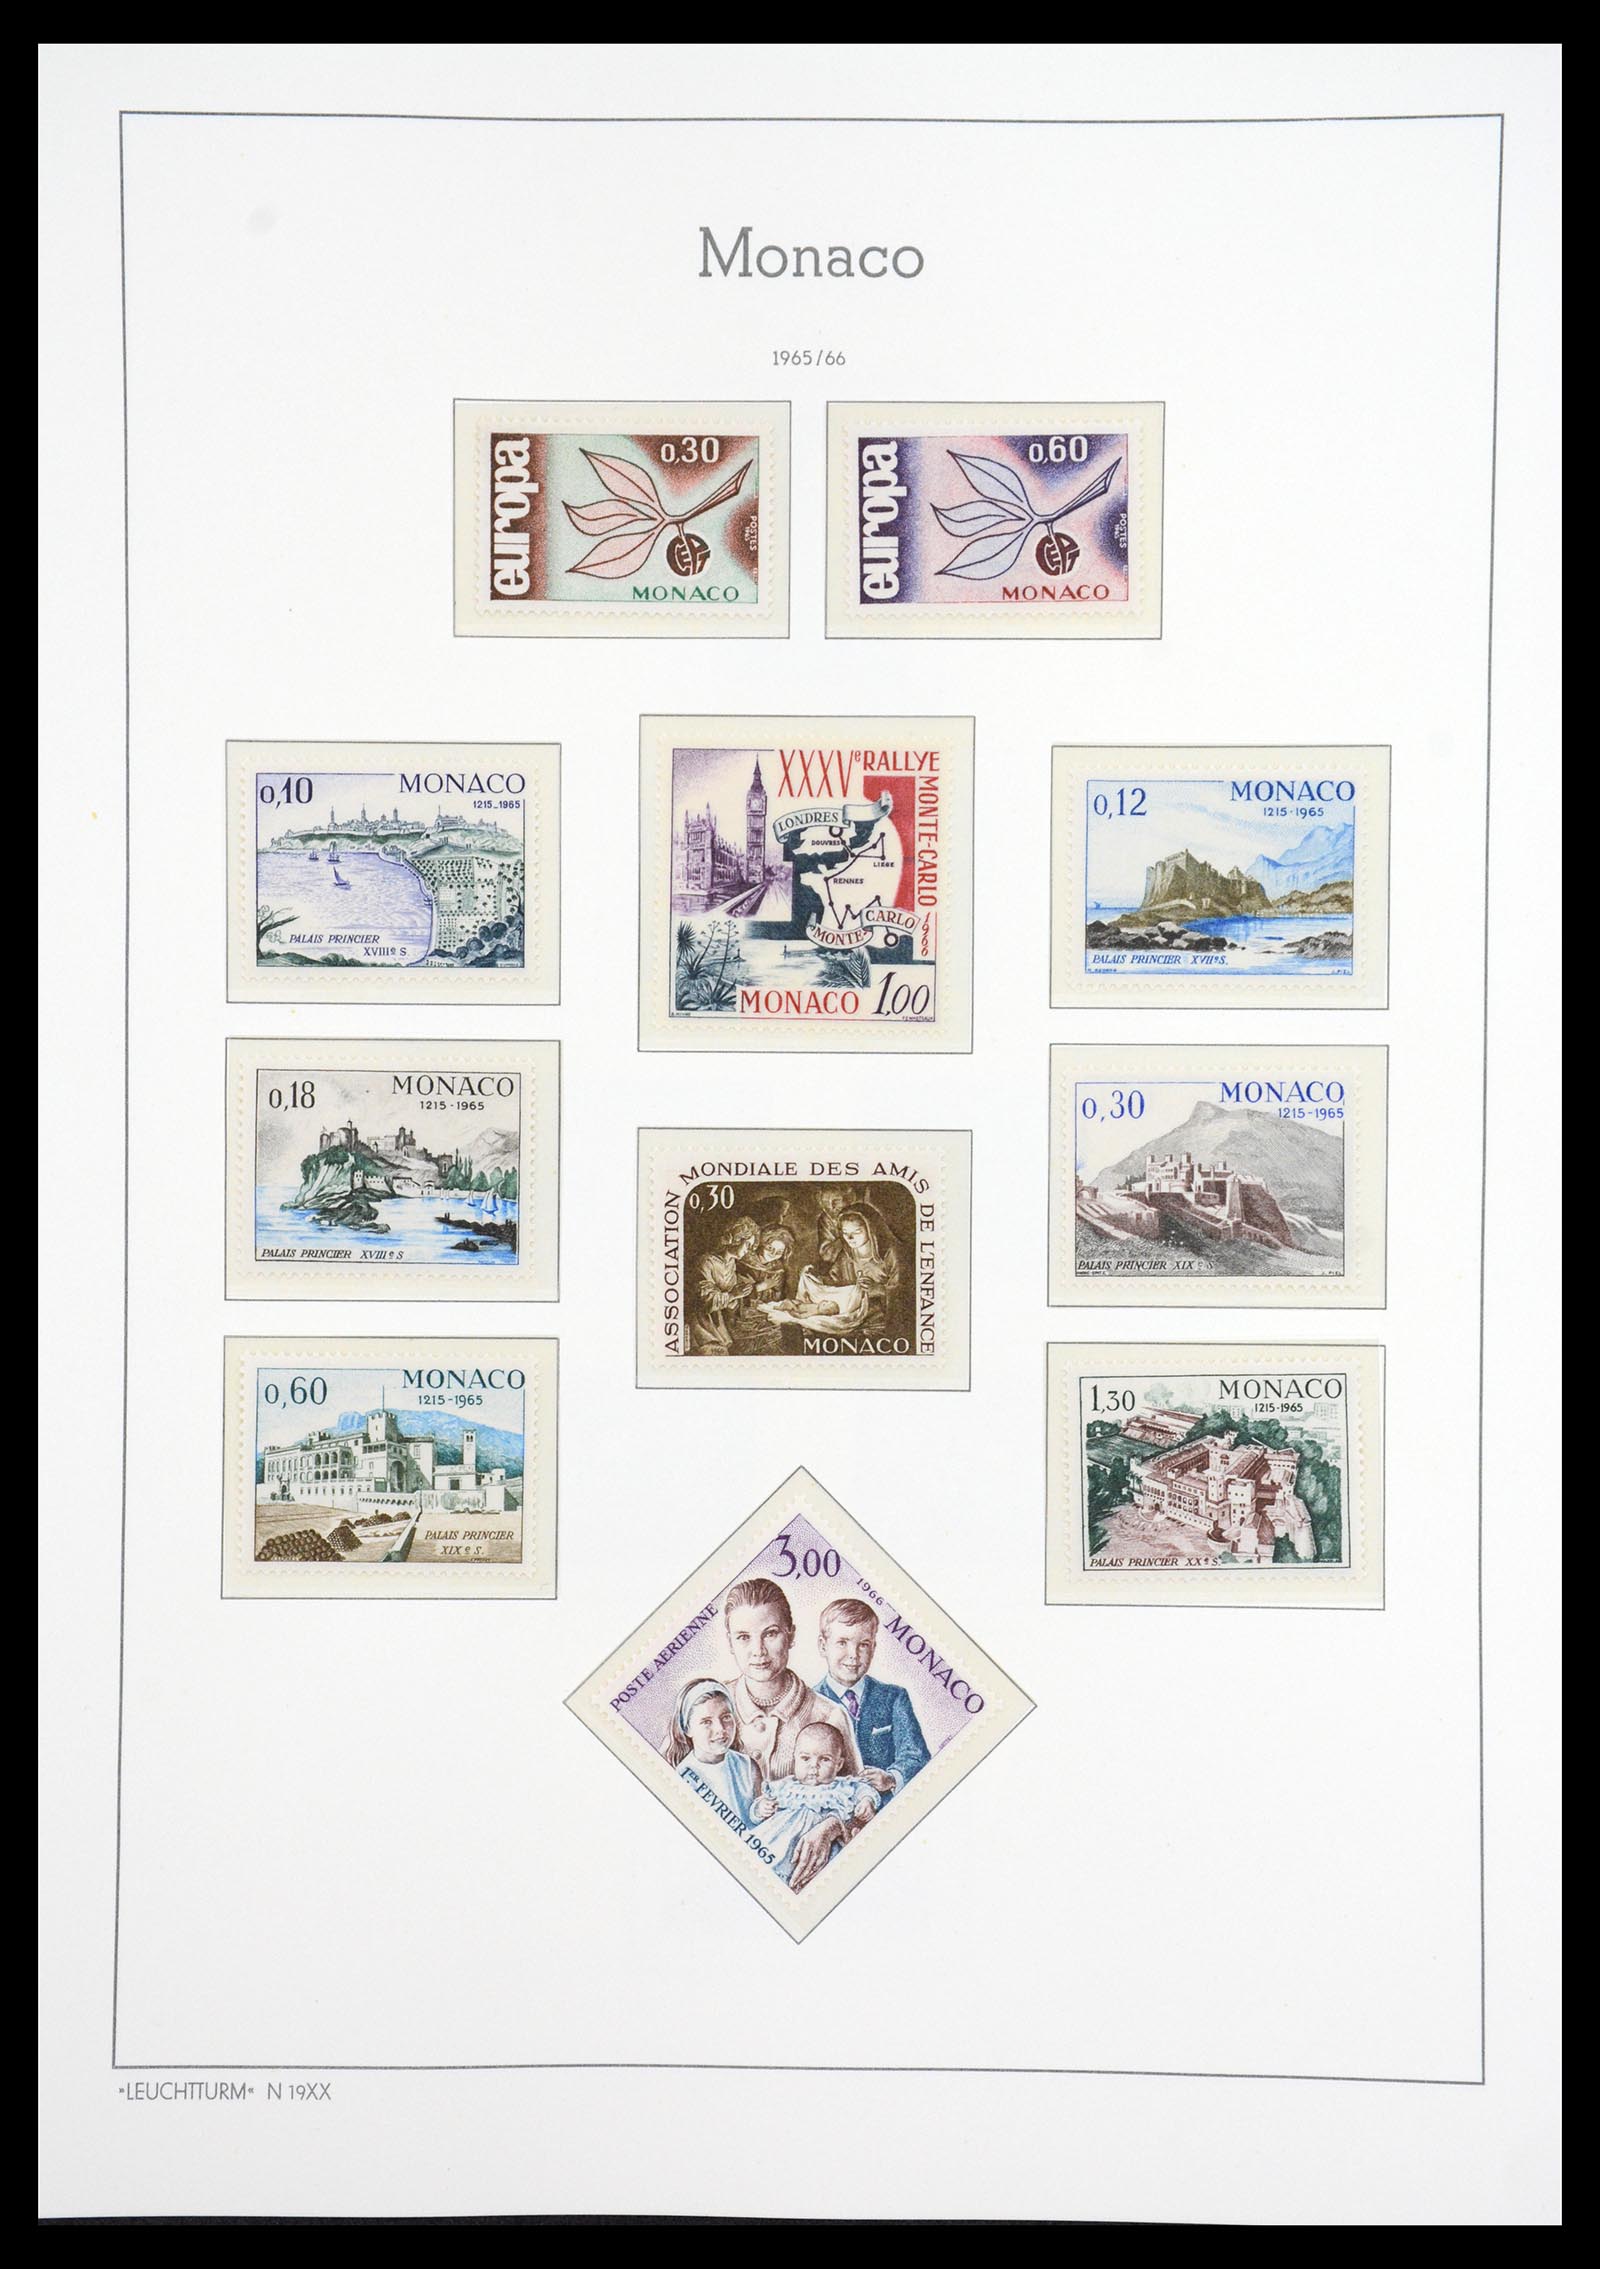 36735 091 - Stamp collection 36735 Monaco 1885-1966.